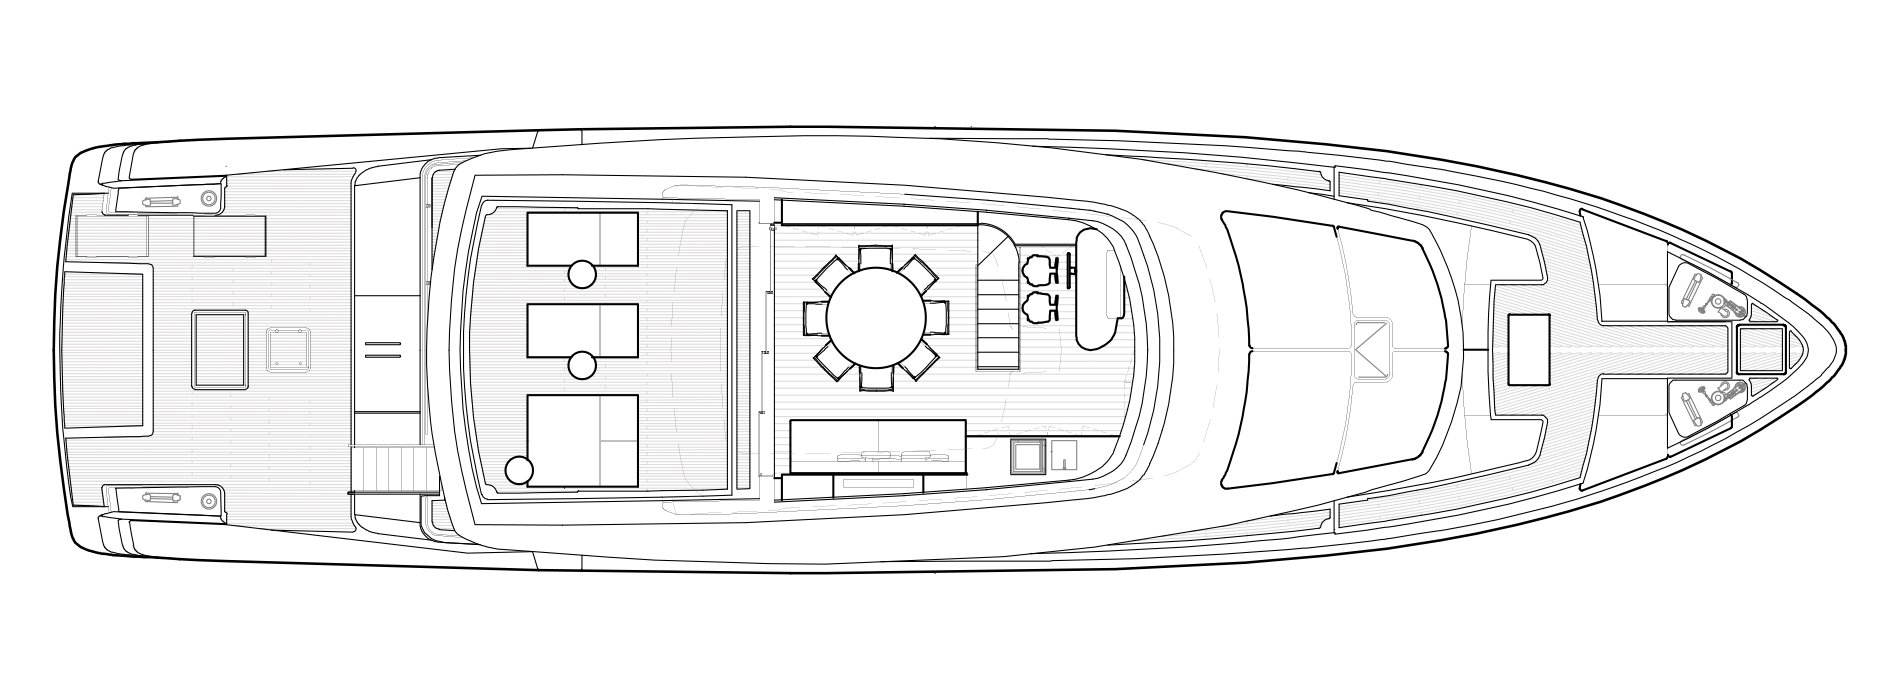 Sanlorenzo Yachts SX100 Flying bridge Version Lissoni